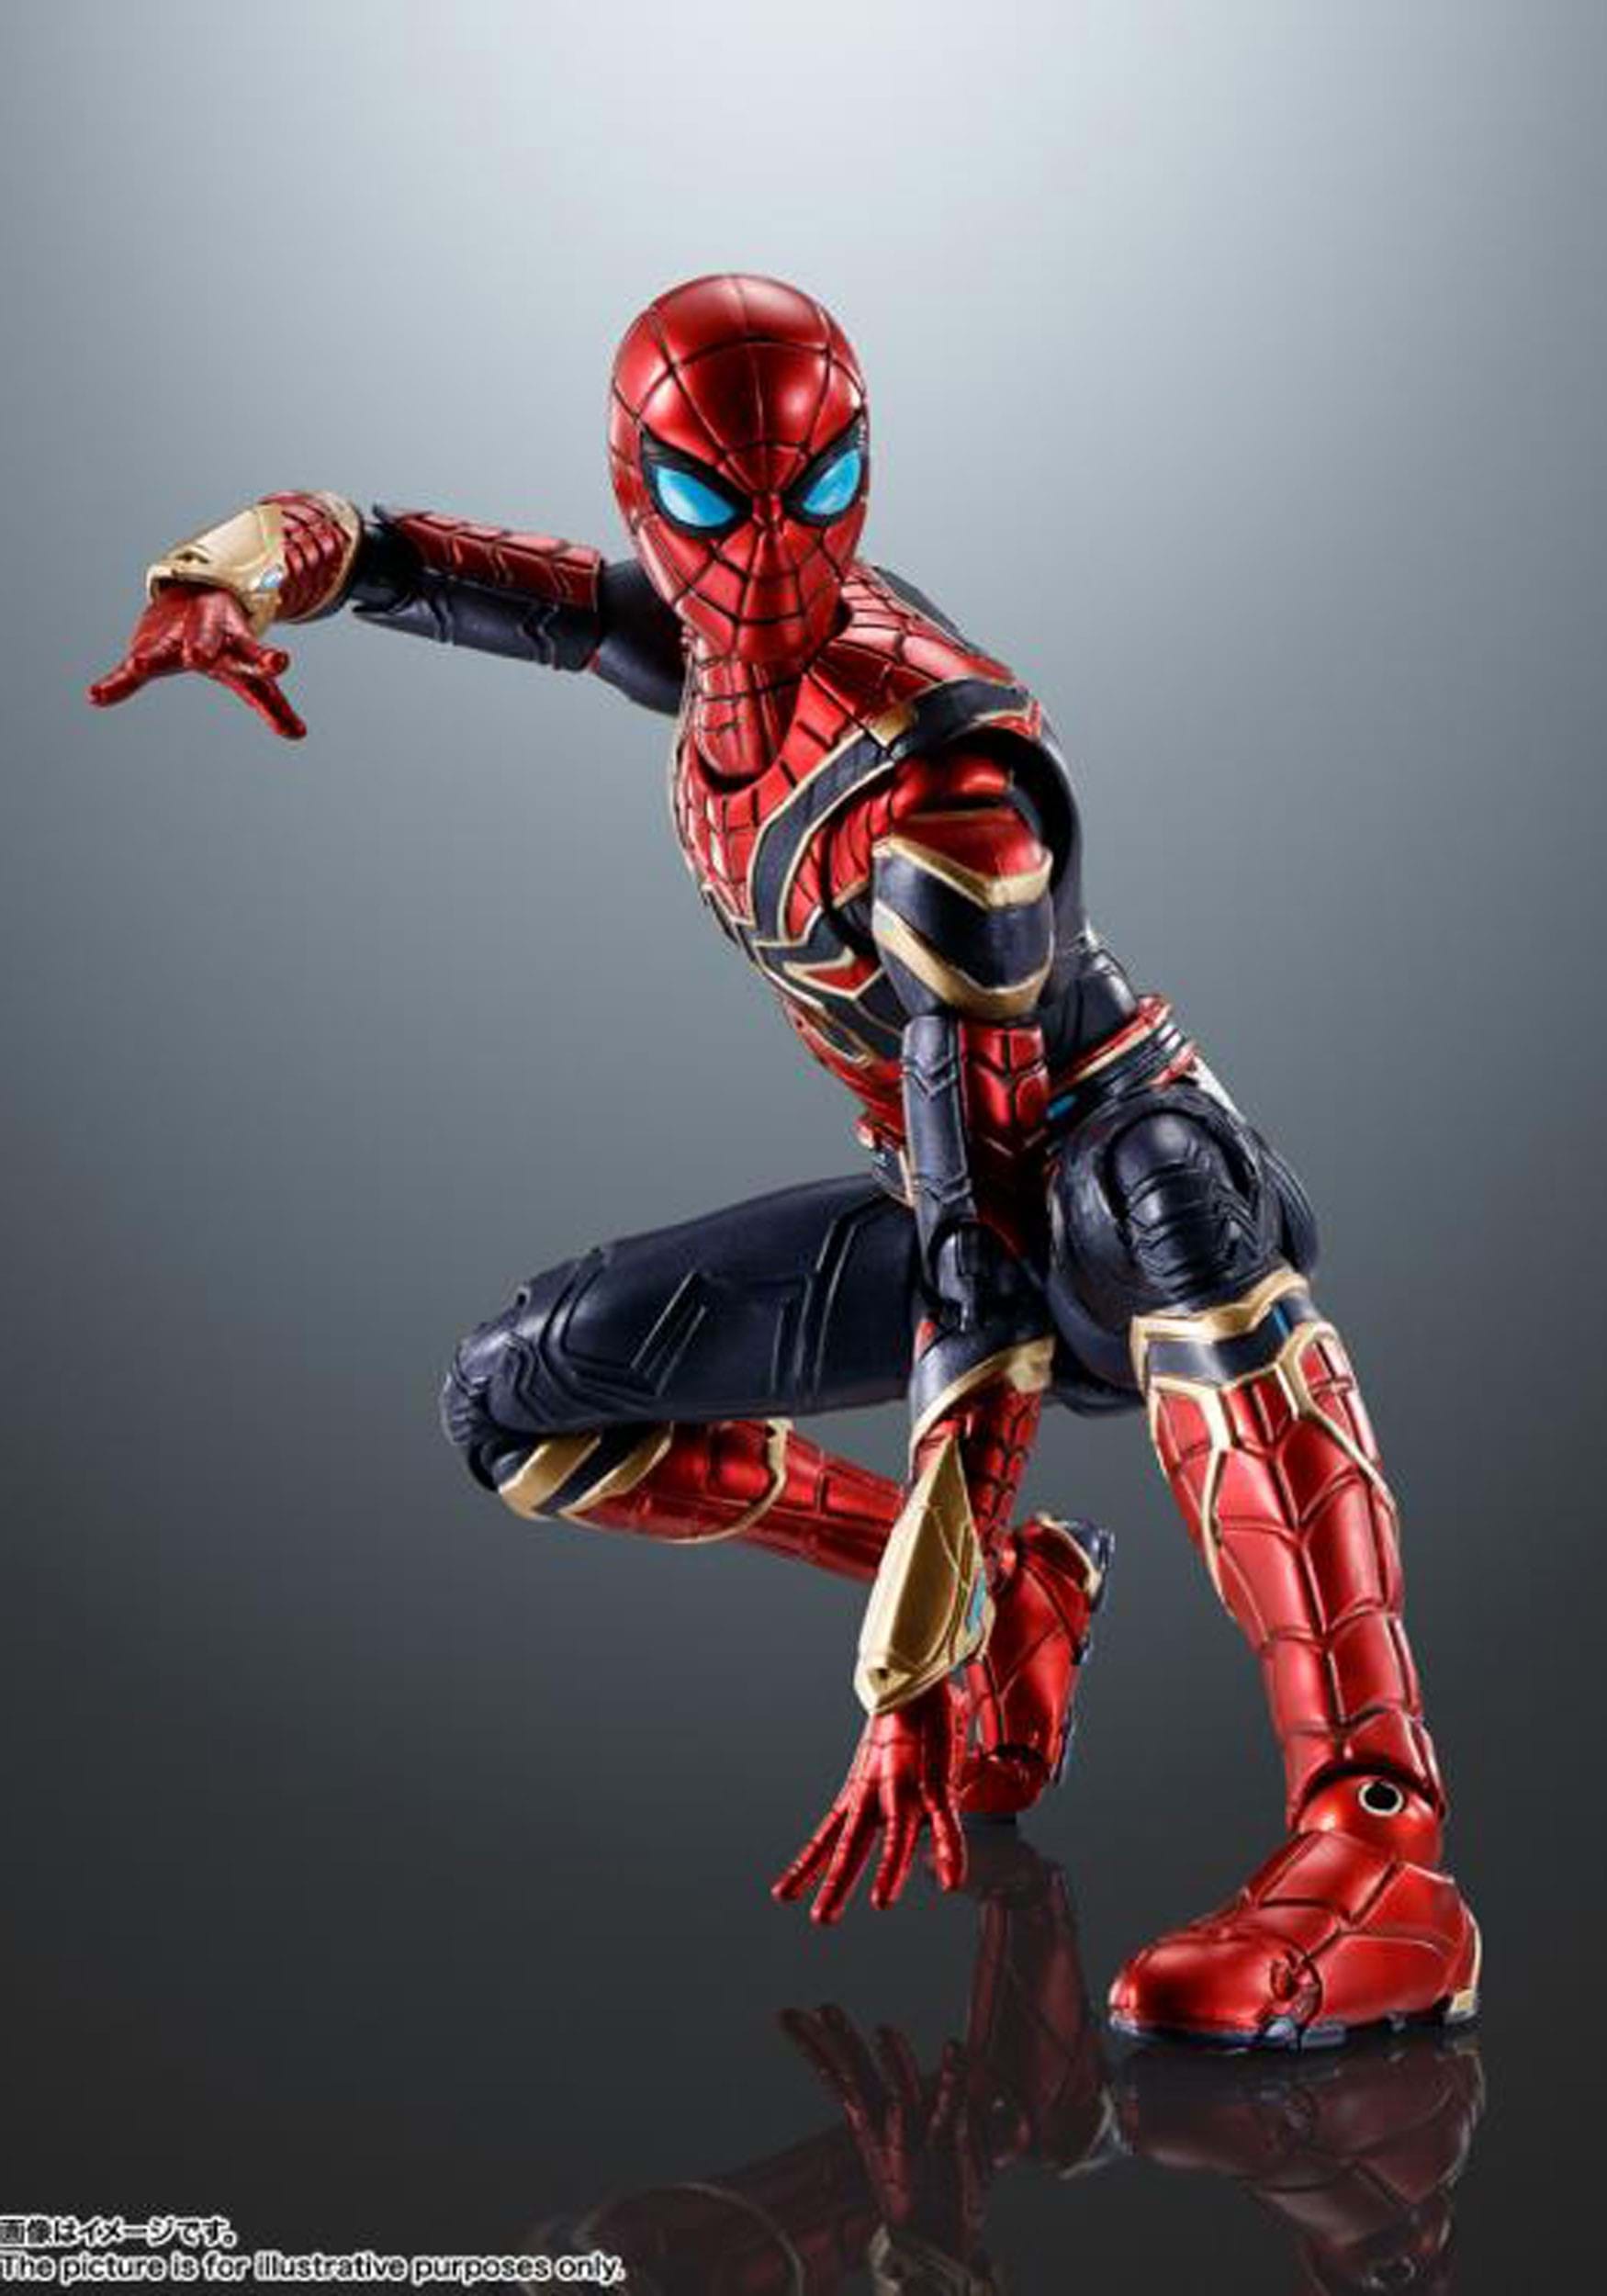 Disney-Marvel Movie Anime Figure, Iron Man, Spider-man Decor